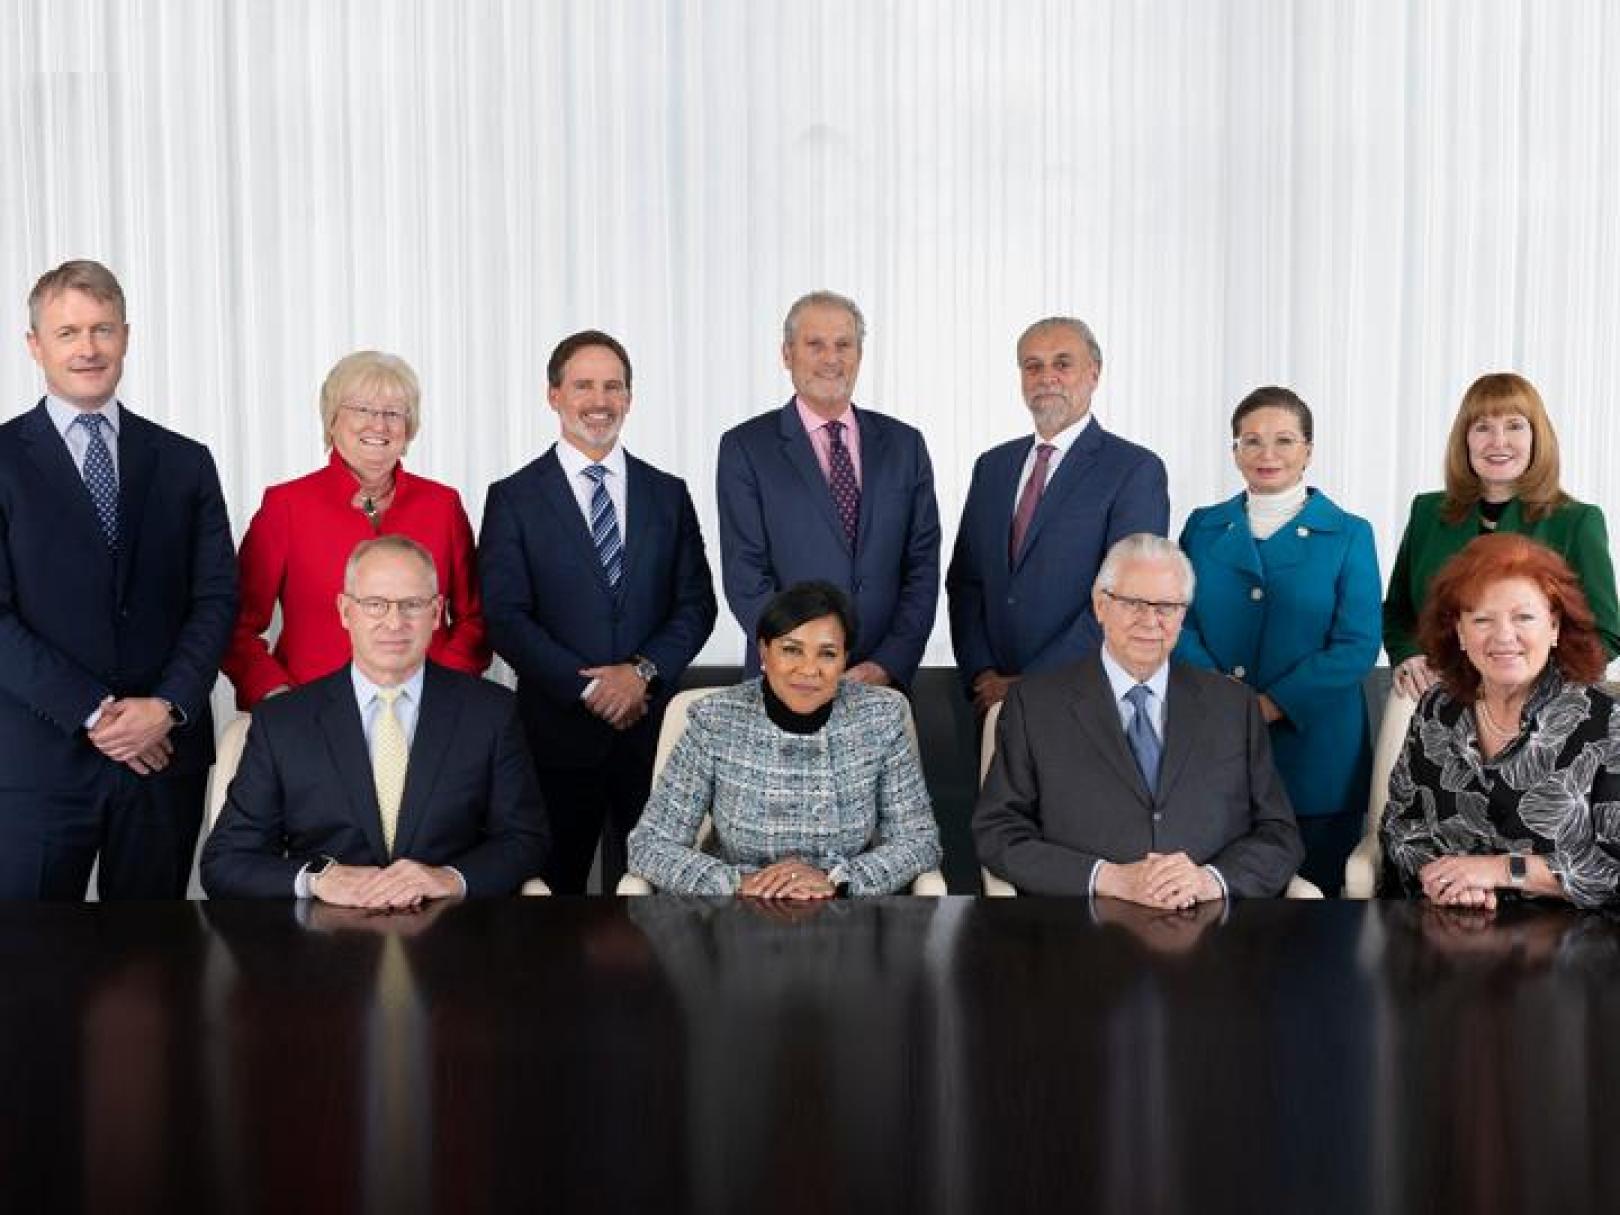 Board senior leadershipd diversity